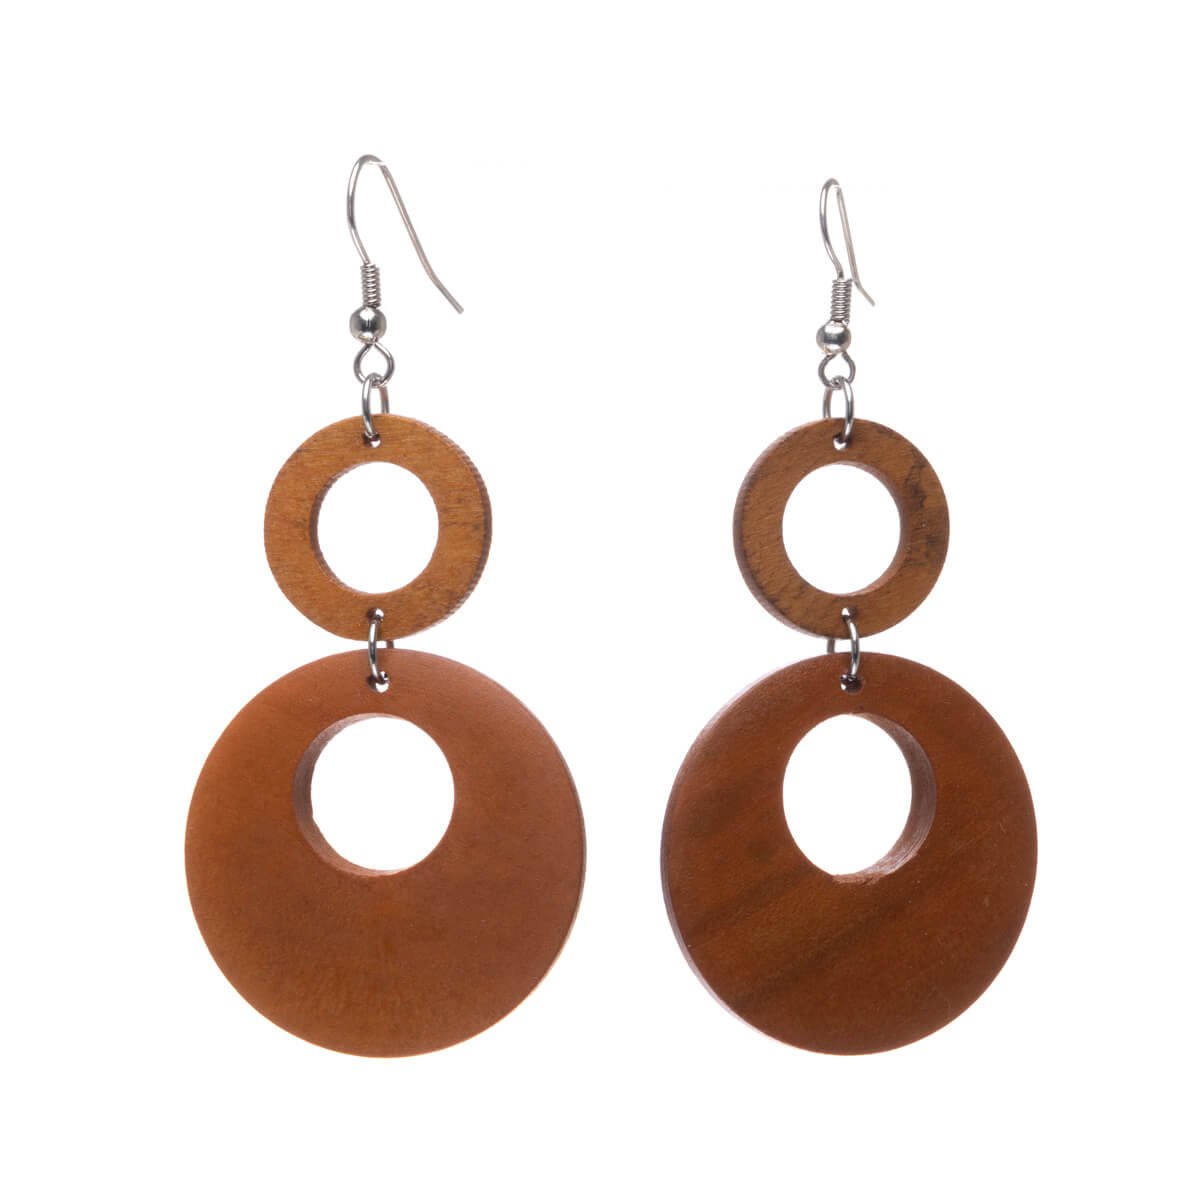 Wooden hanging ring earrings (Steel 316L)